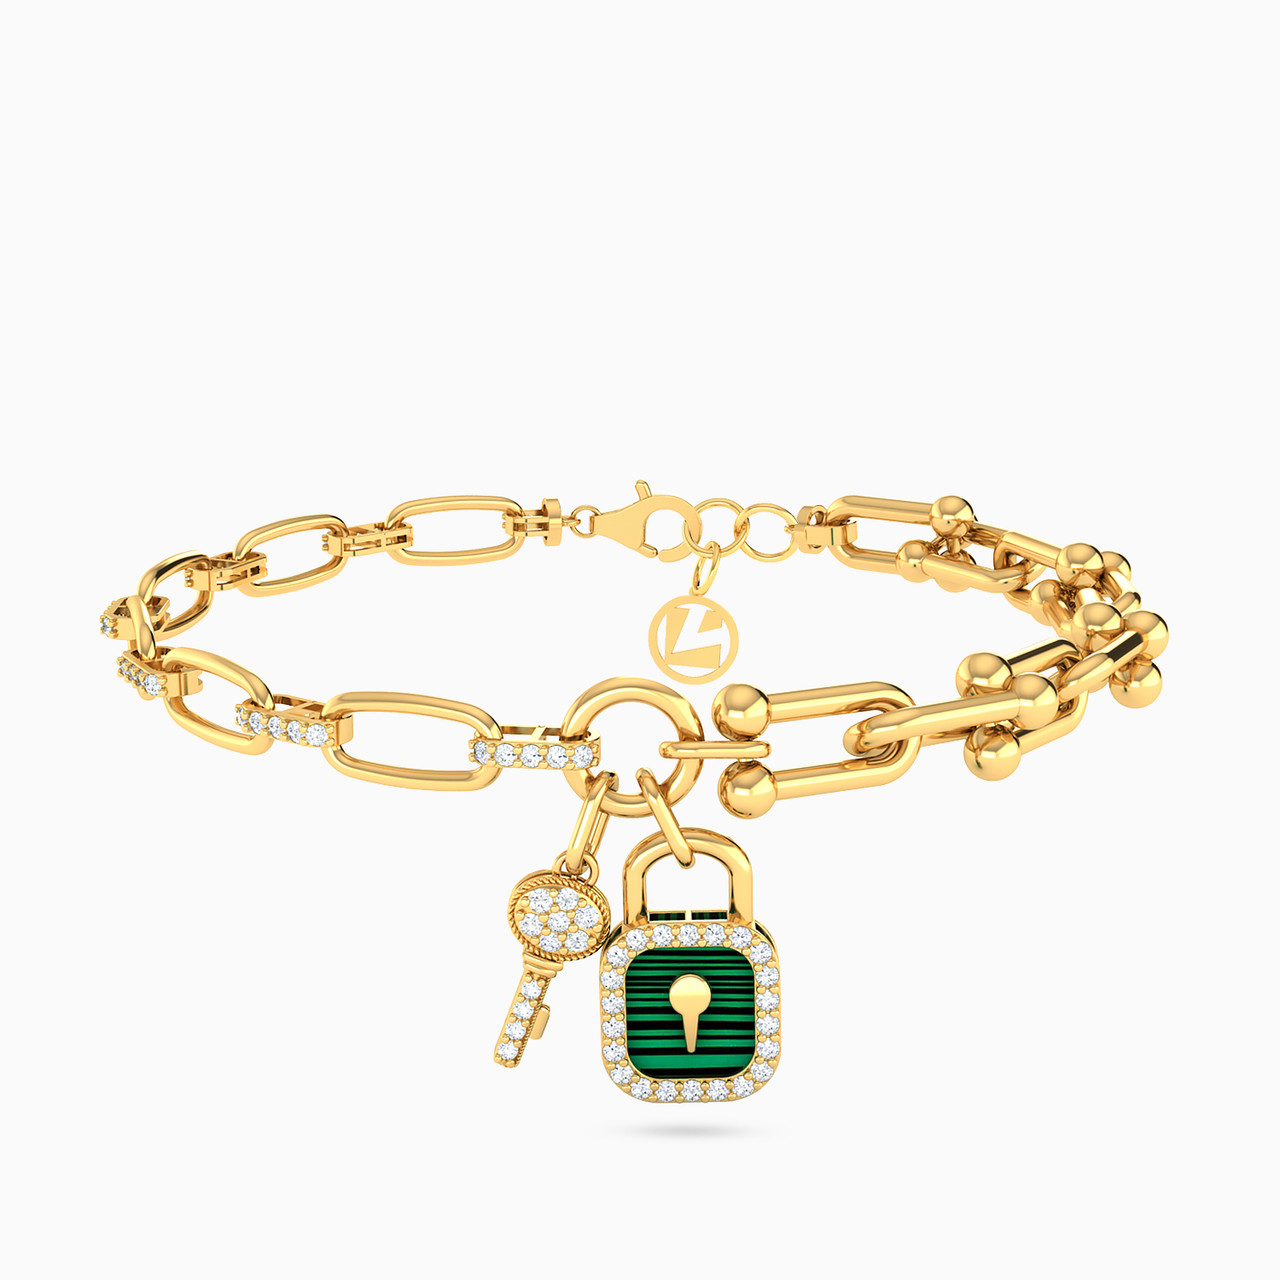 18K Gold Colored Stones & Enamel Coated Chain Bracelet